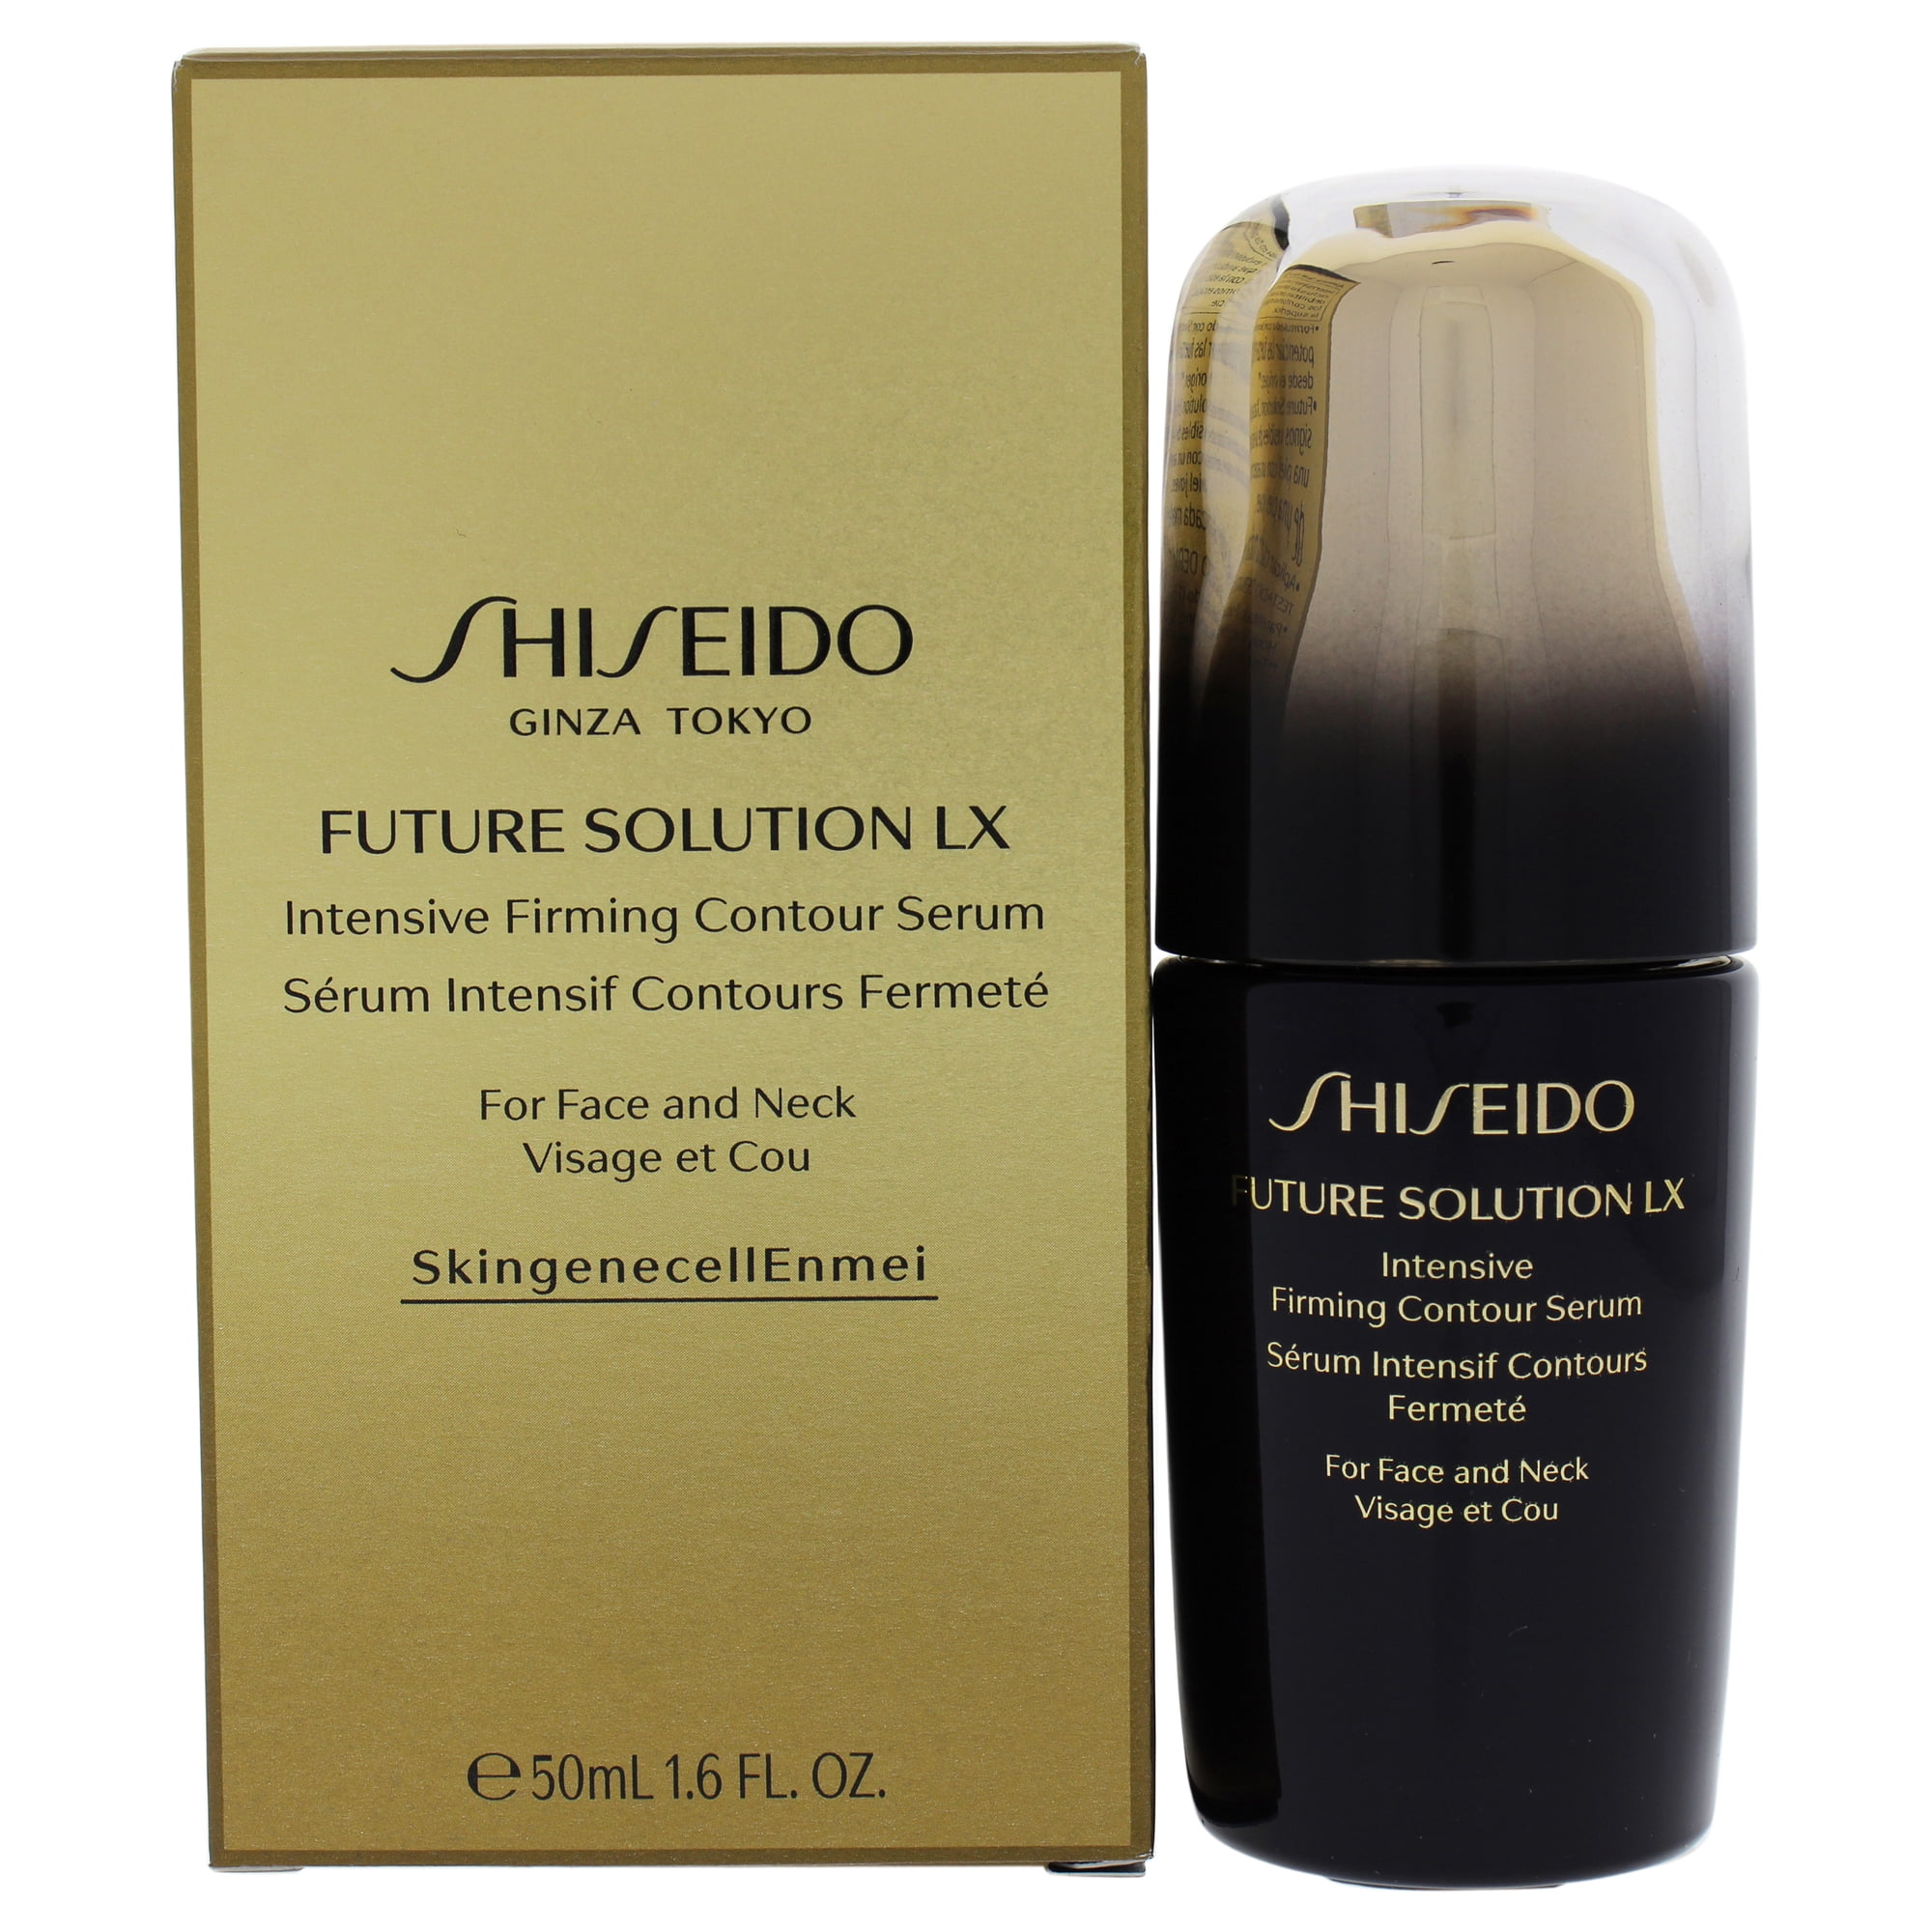 Shiseido Future solution LX Serum. Shiseido Future solution LX ночной крем чье производство. Шисейдо тон Футуре отзывы. Shiseido 101 Ginkgo отзывы. Shiseido lx